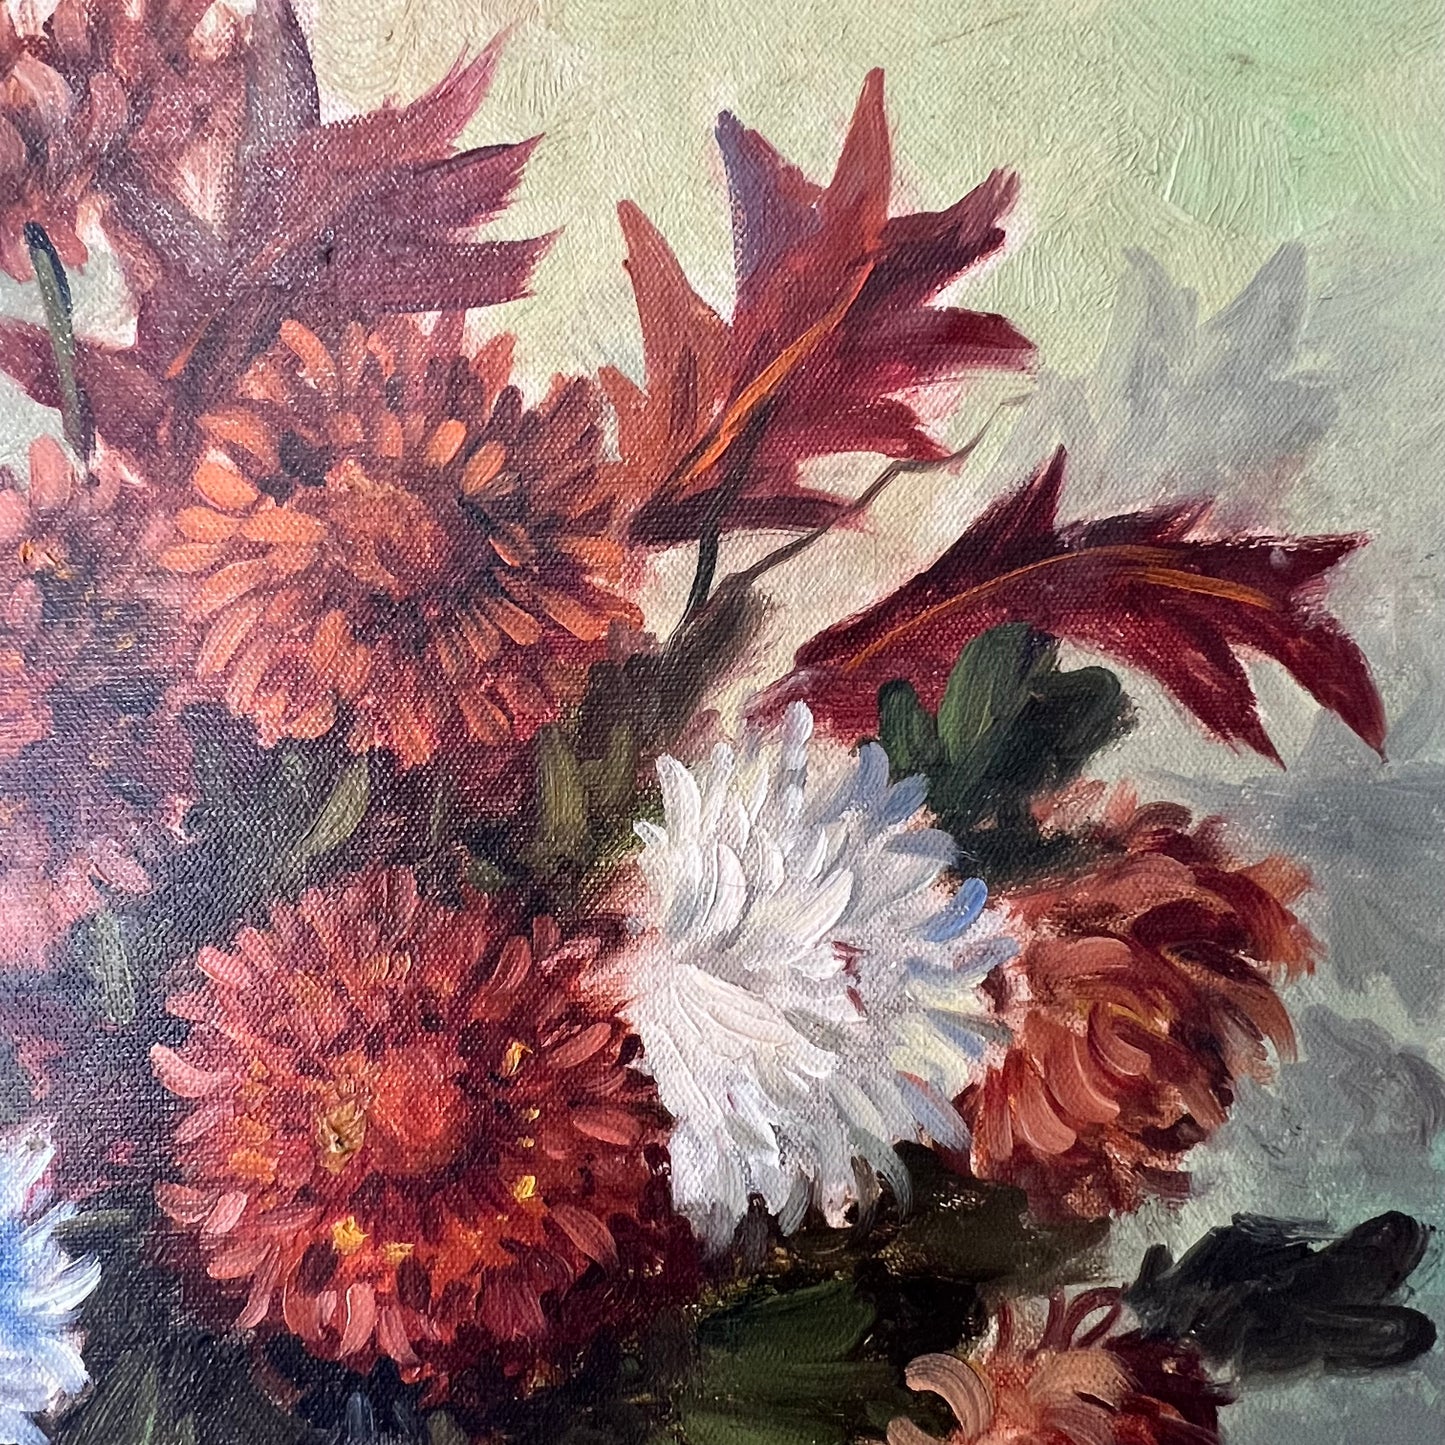 Vintage Oil Painting Dutch Still Life Chrysanthemum Blooms 1948